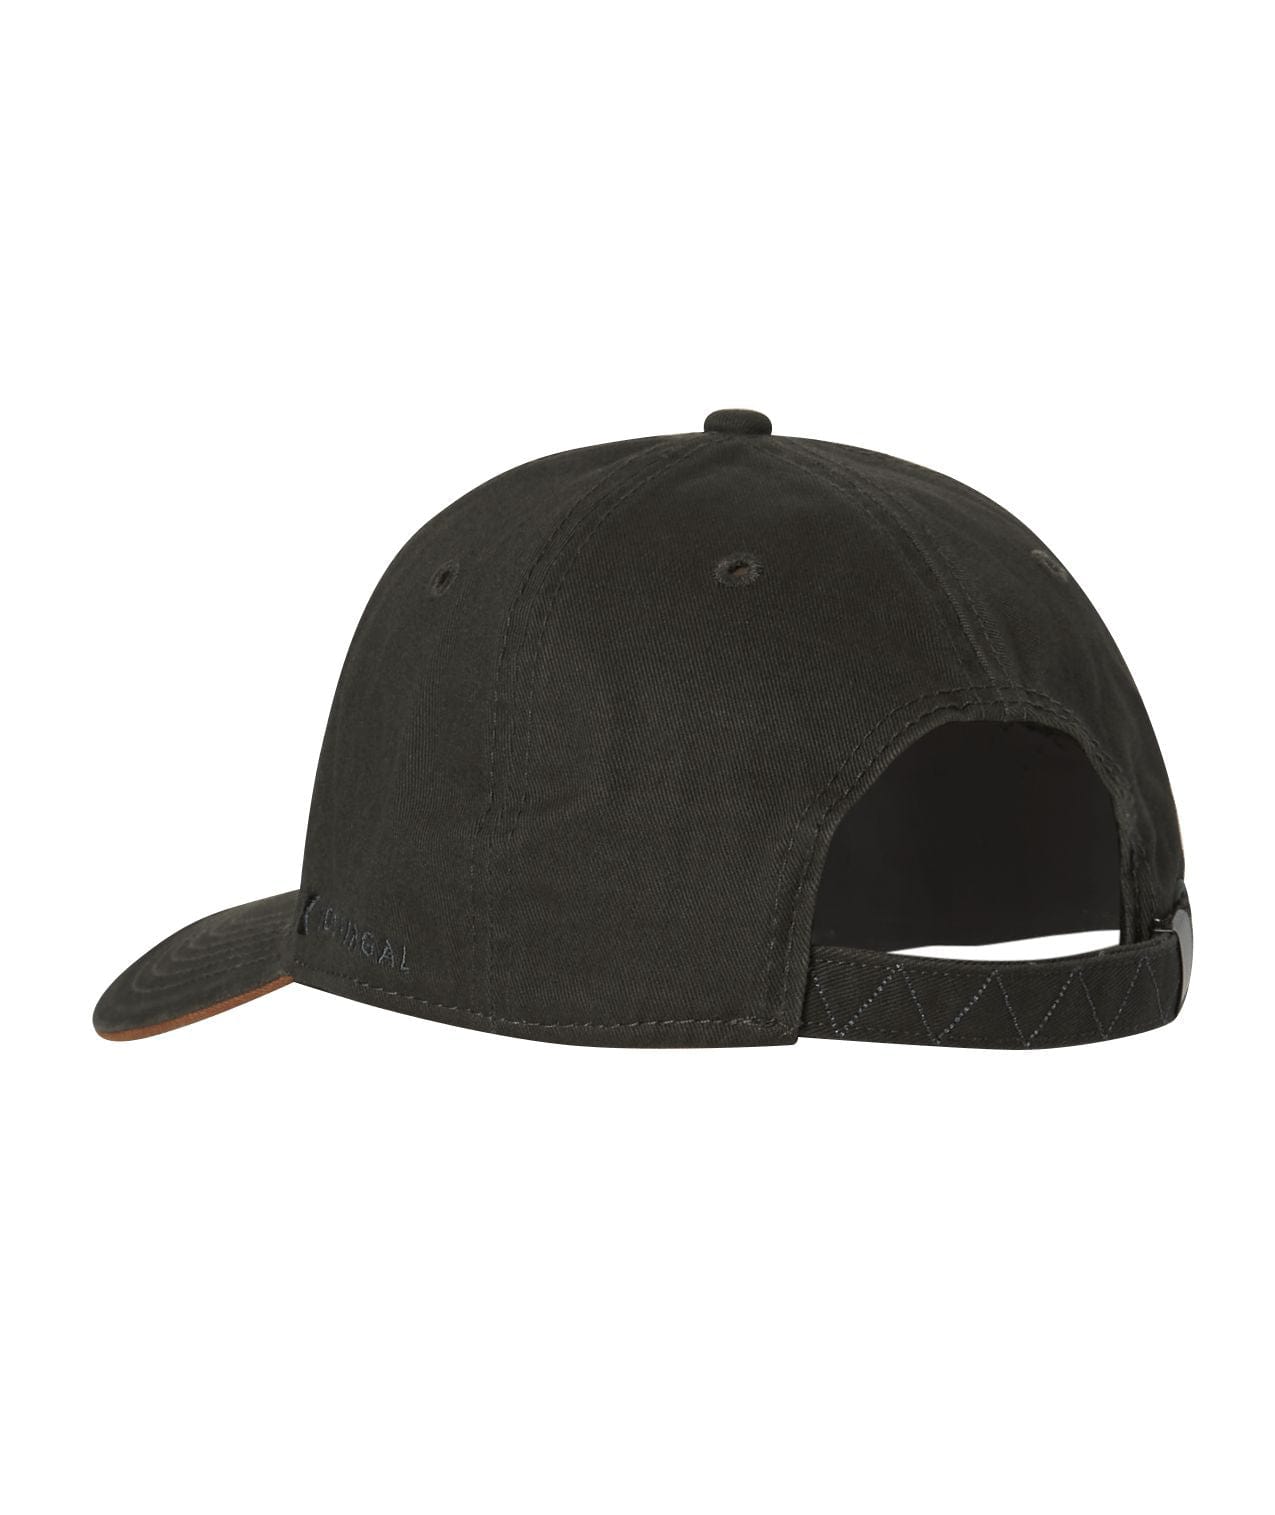 Kooringal Men's Hats Boston Casual Cap